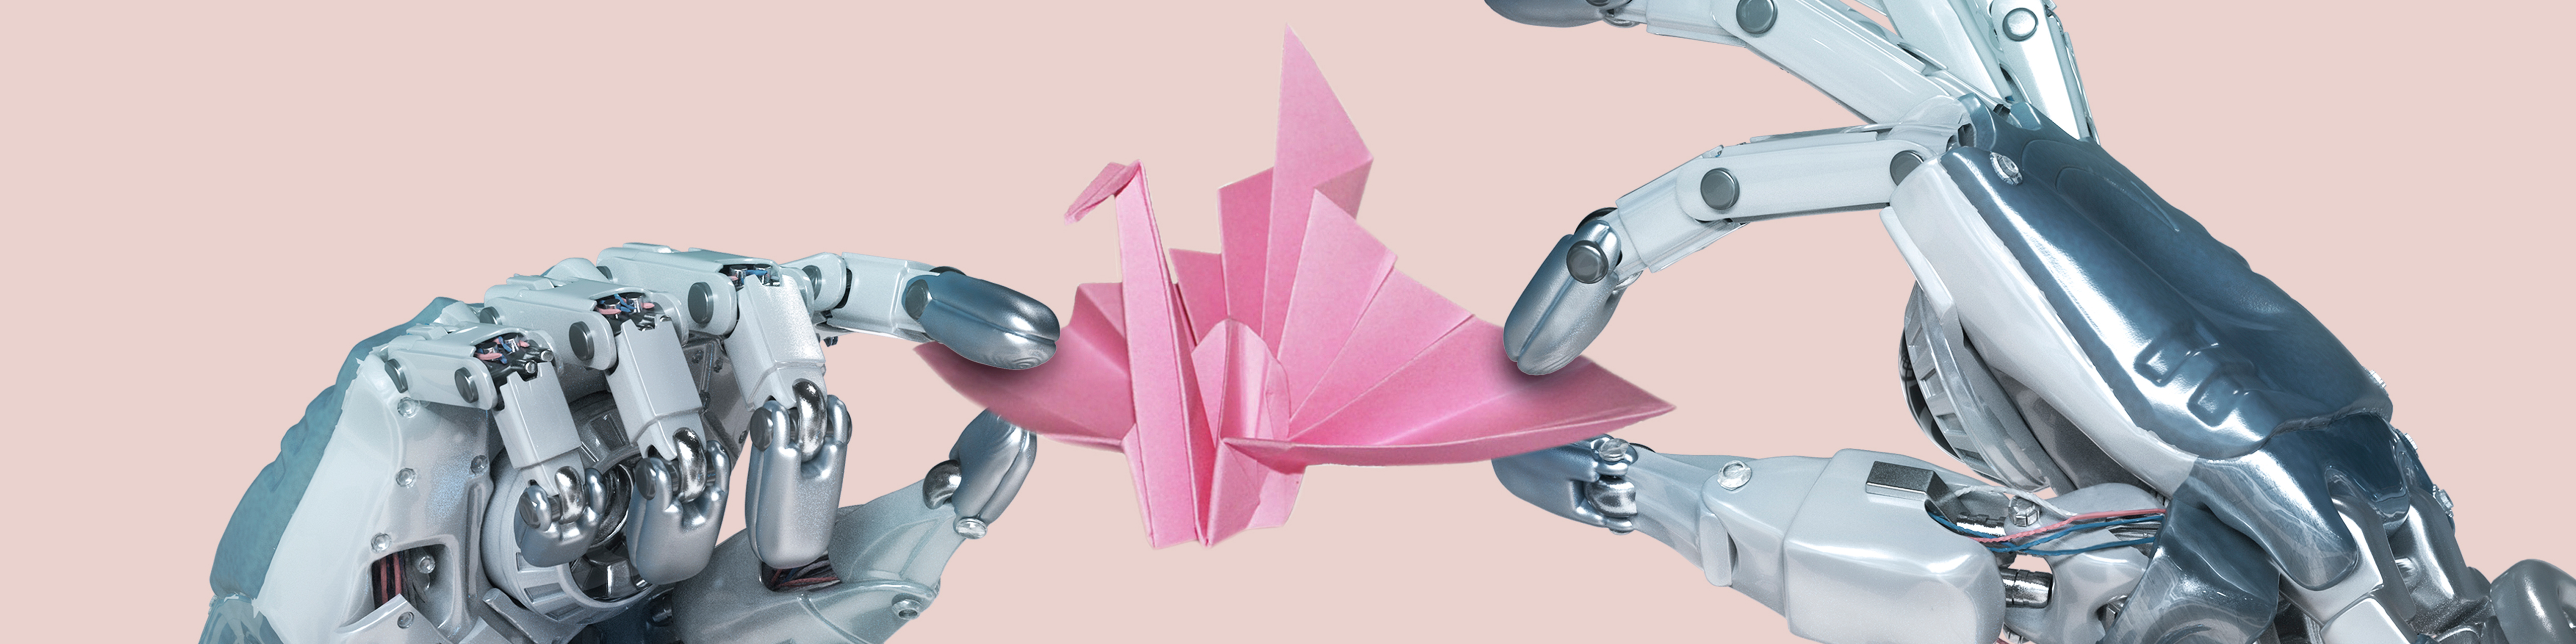 Robot hand making an origami paper crane